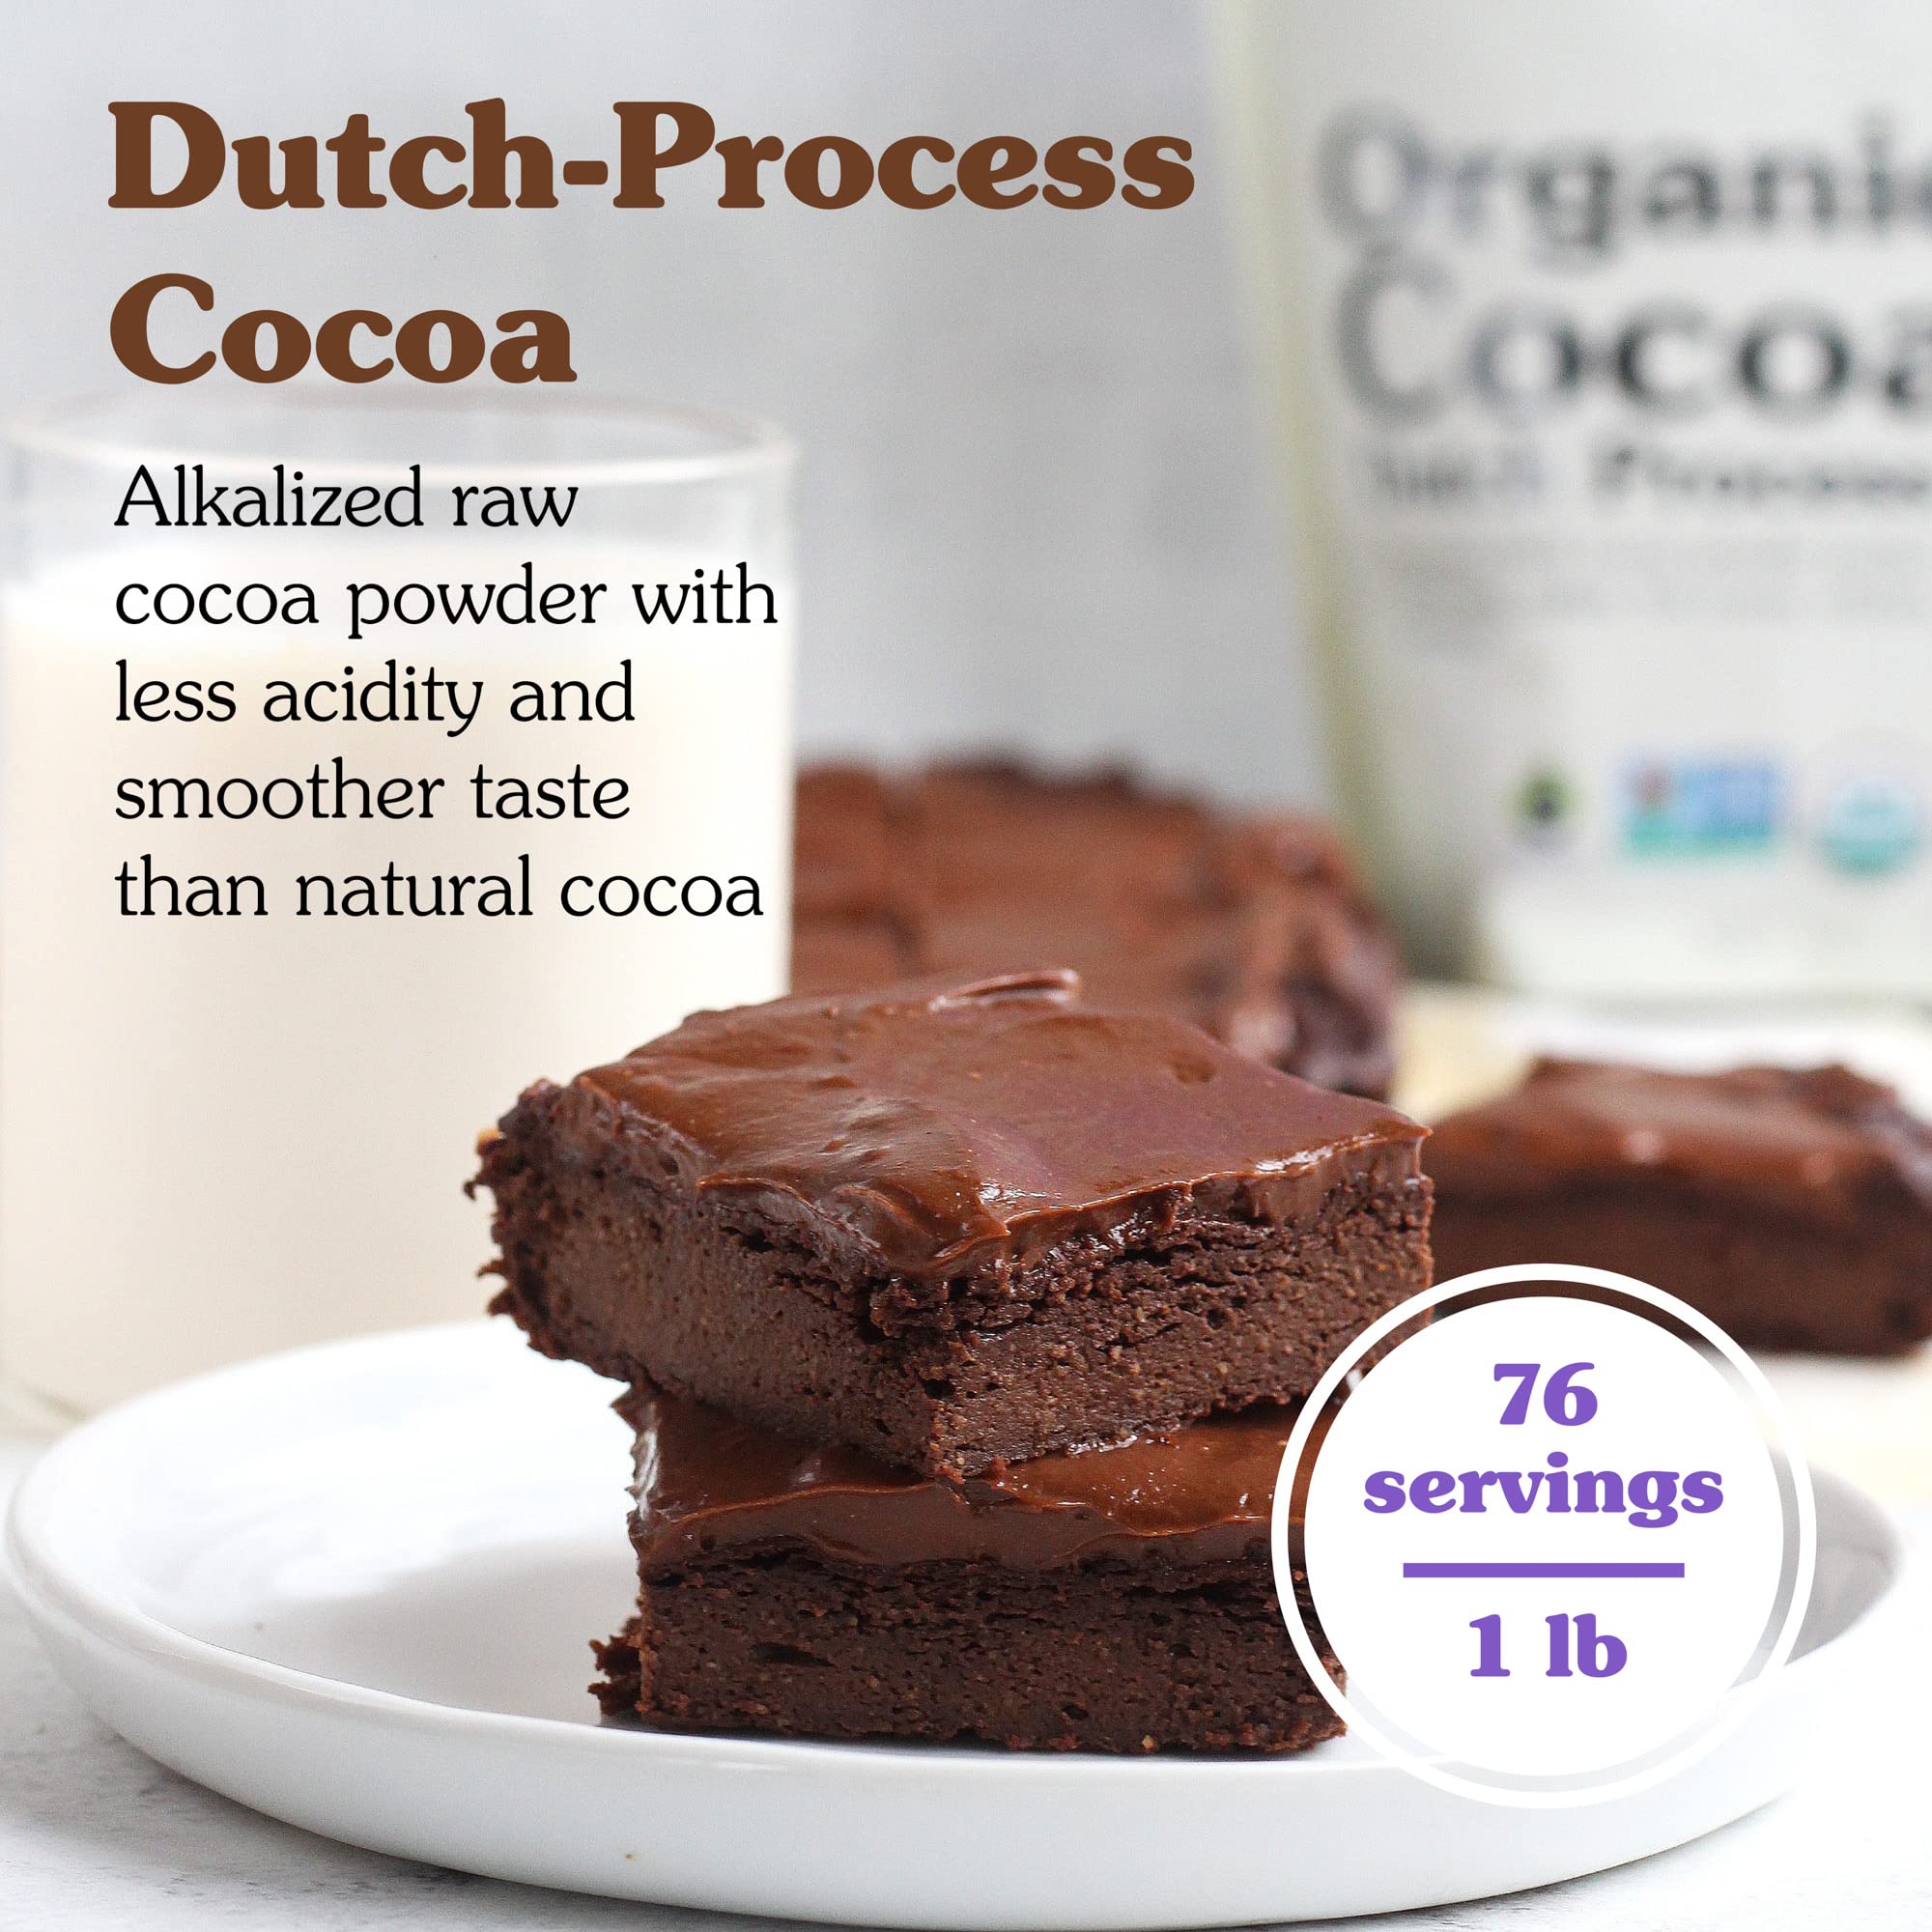 NuNaturals Organic Fair Trade Cocoa Powder, Premium Dutch-Process For Drinking and Baking, 1 lb